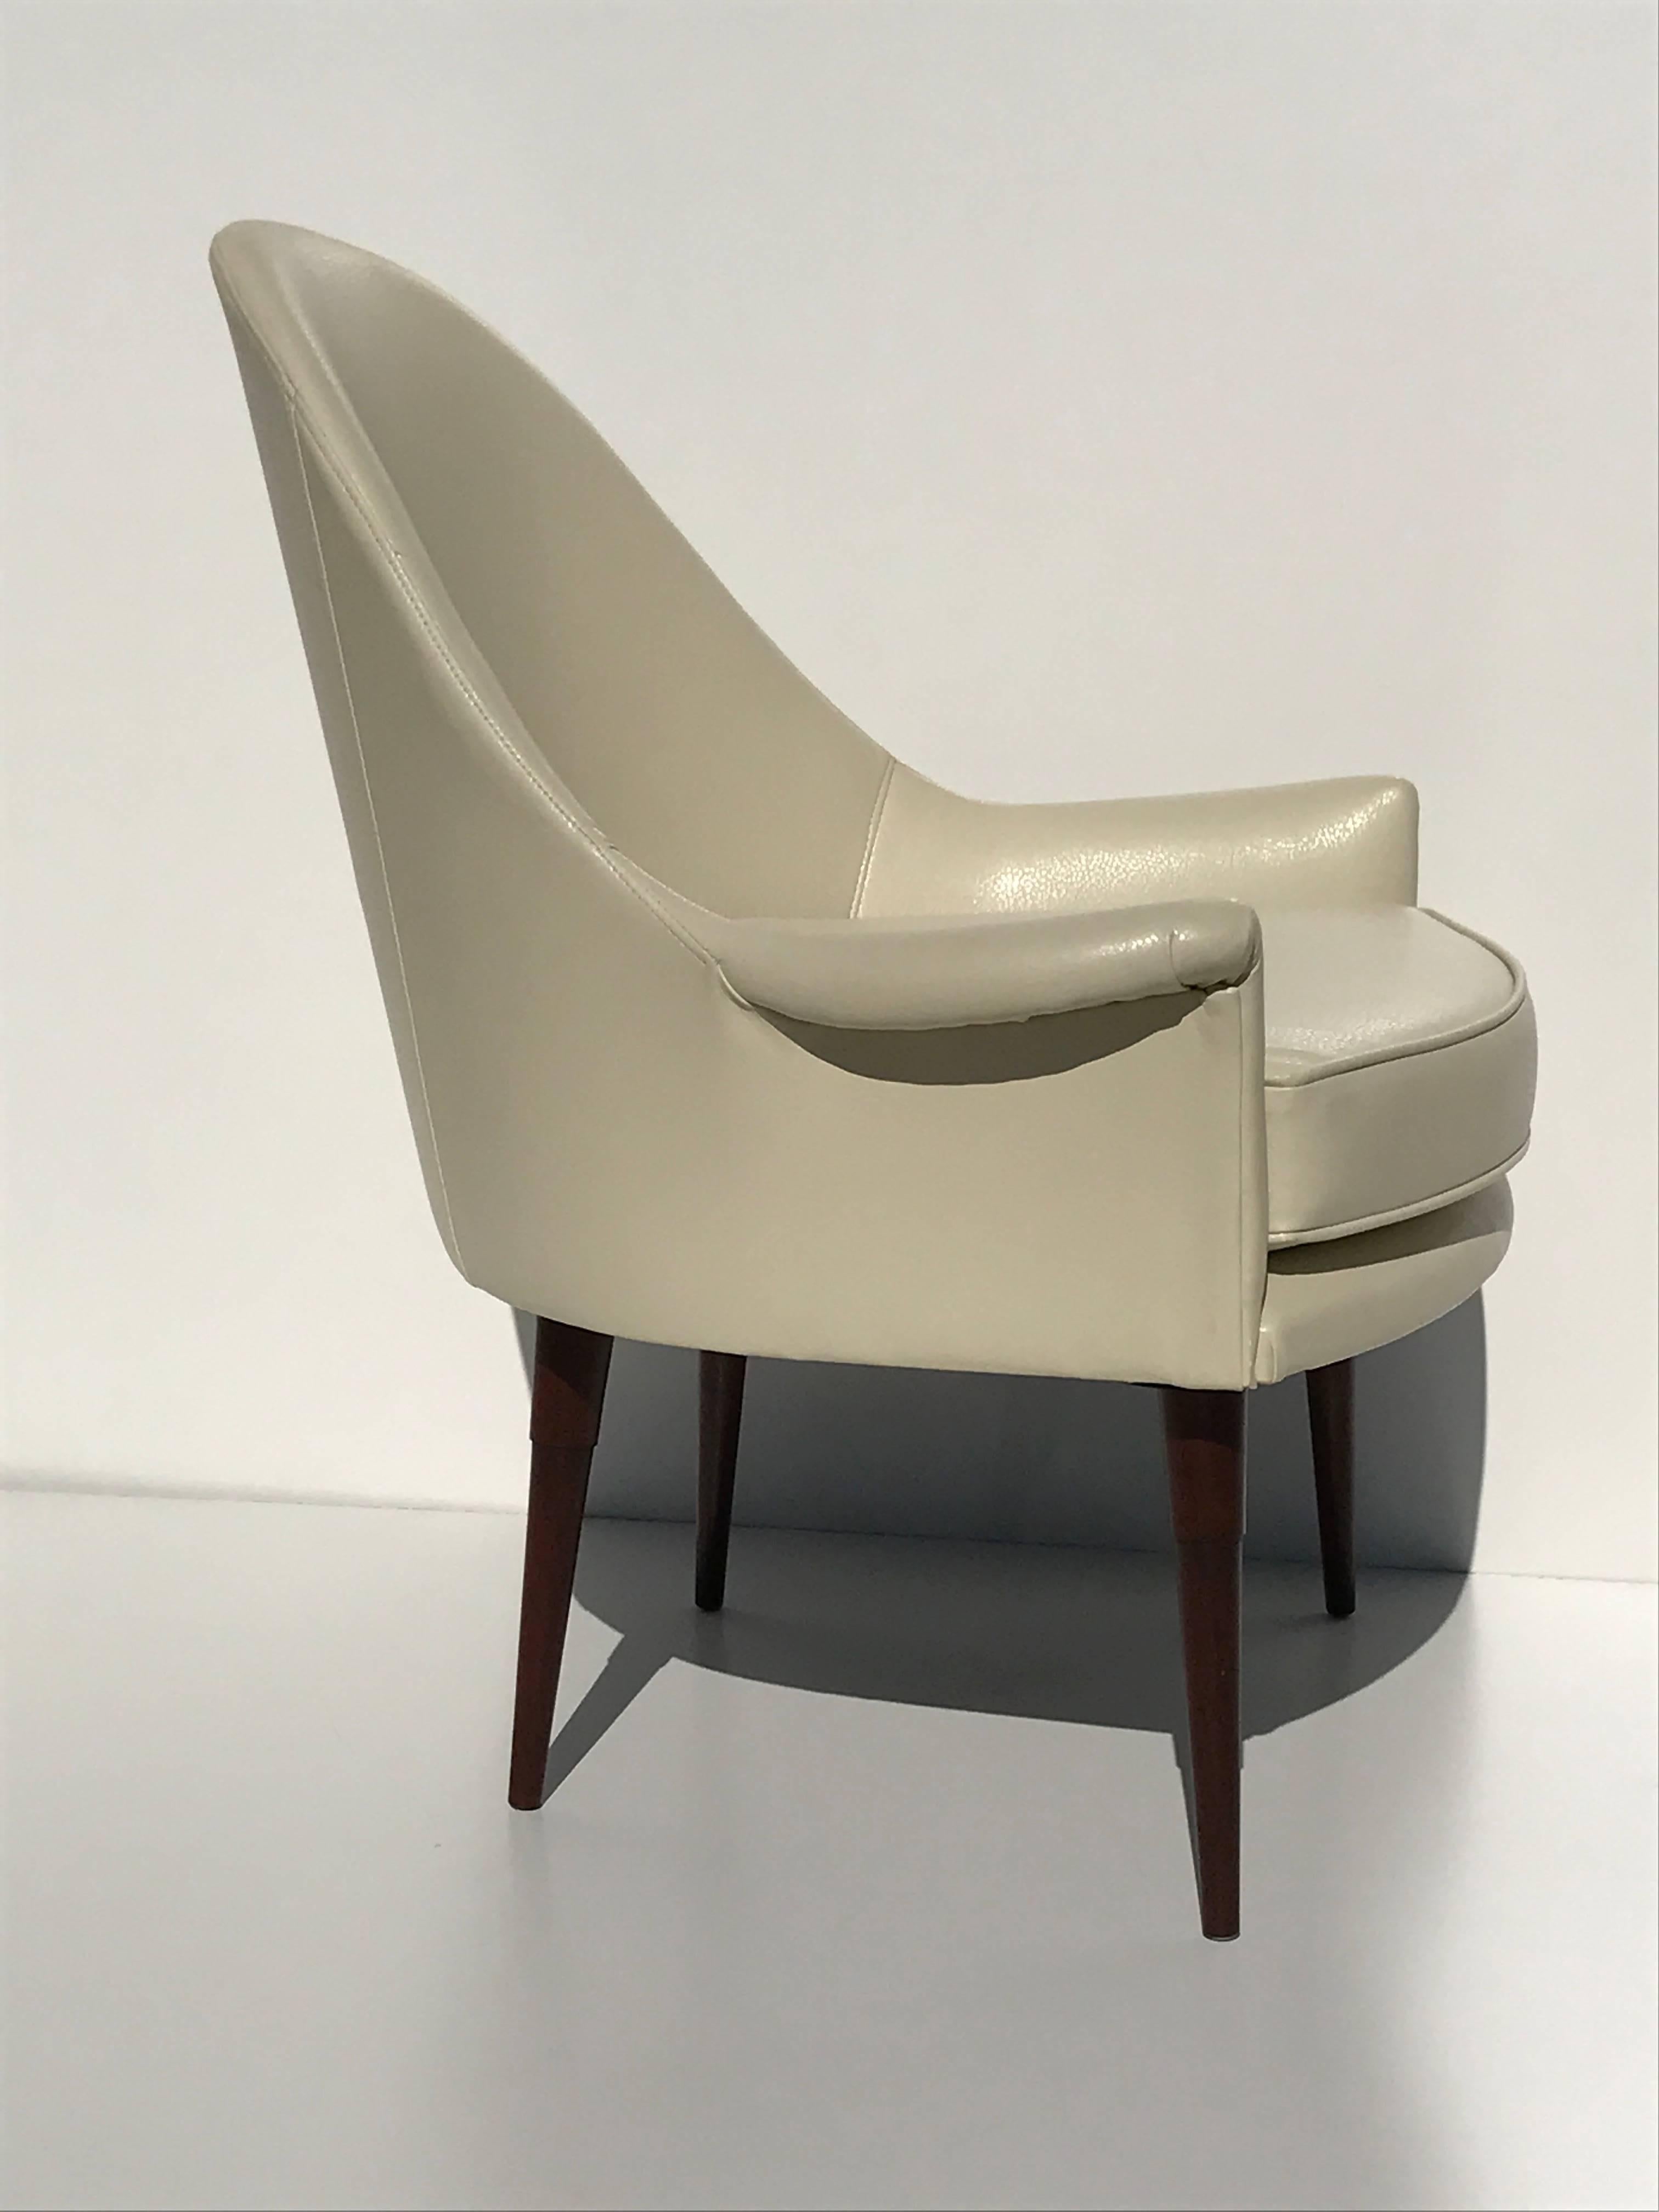 Petite Mid-Century Sessel mit schalenförmiger Rückenlehne aus cremefarbenem Naugahyde.